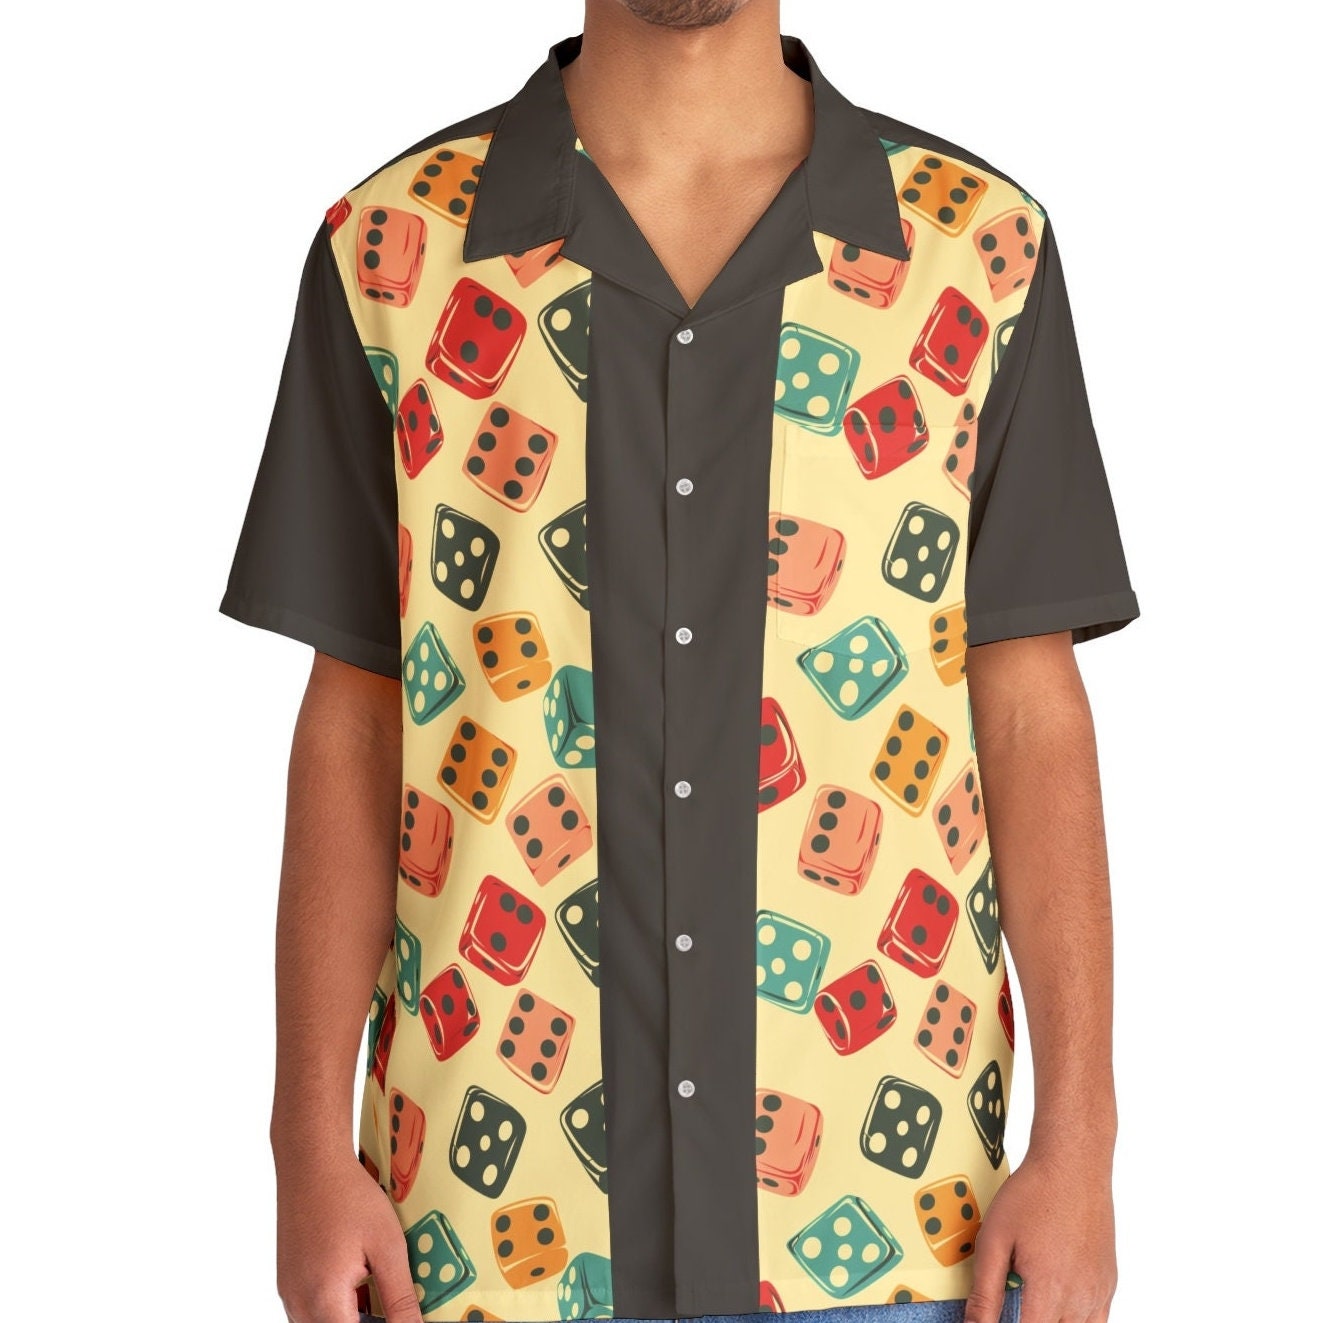 Dice Retro Vintage-inspired Hawaiian Shirt, 1950s/60s style